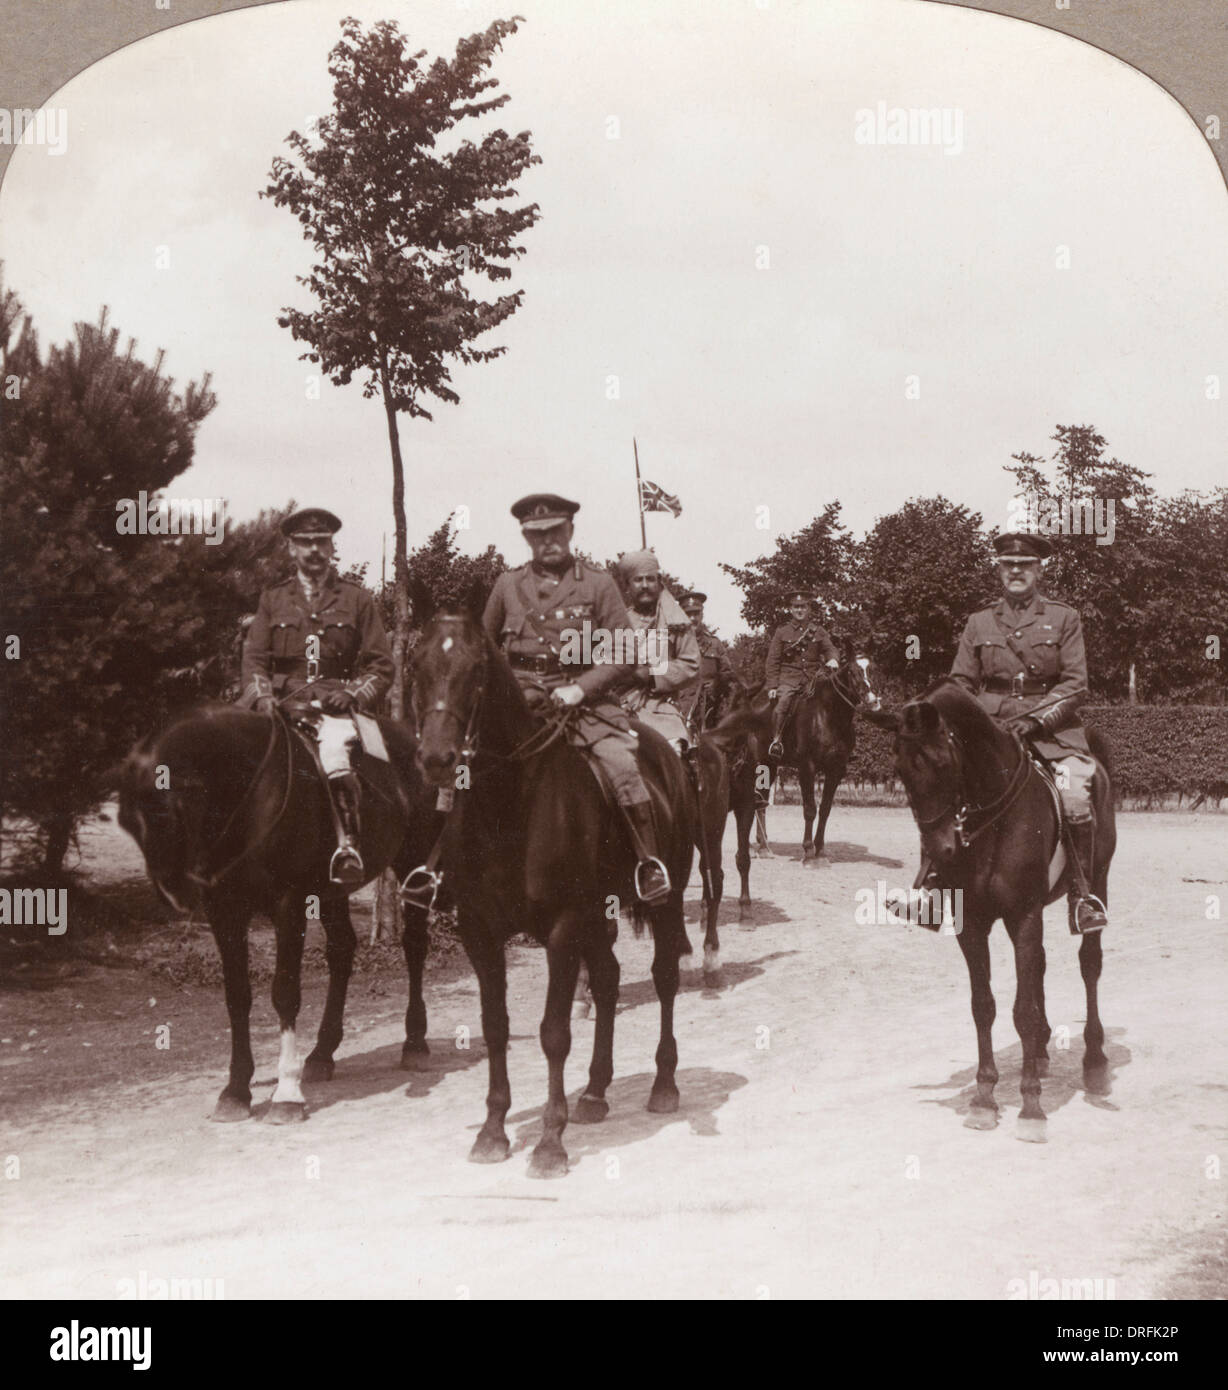 British Army Indian Cavalry Horses France 1915 World War 1 5x4" Reprint Photo bl 